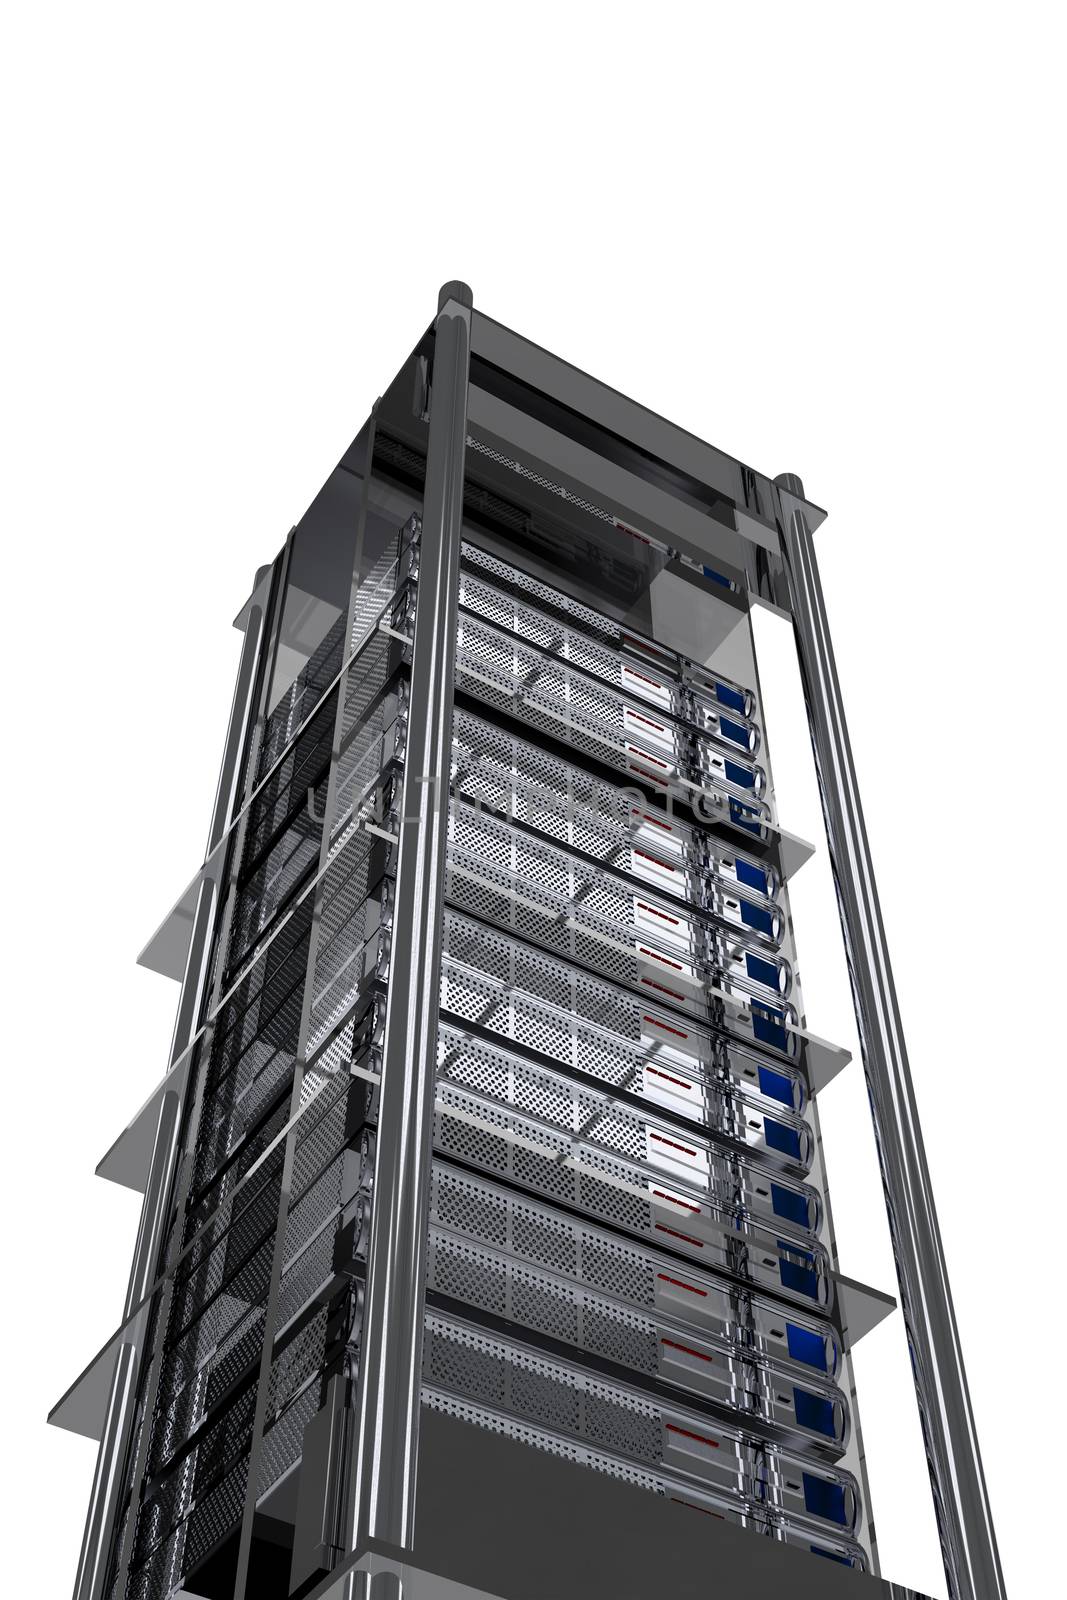 Servers Tower - Modern Metallic Server Rack Isolated on White.